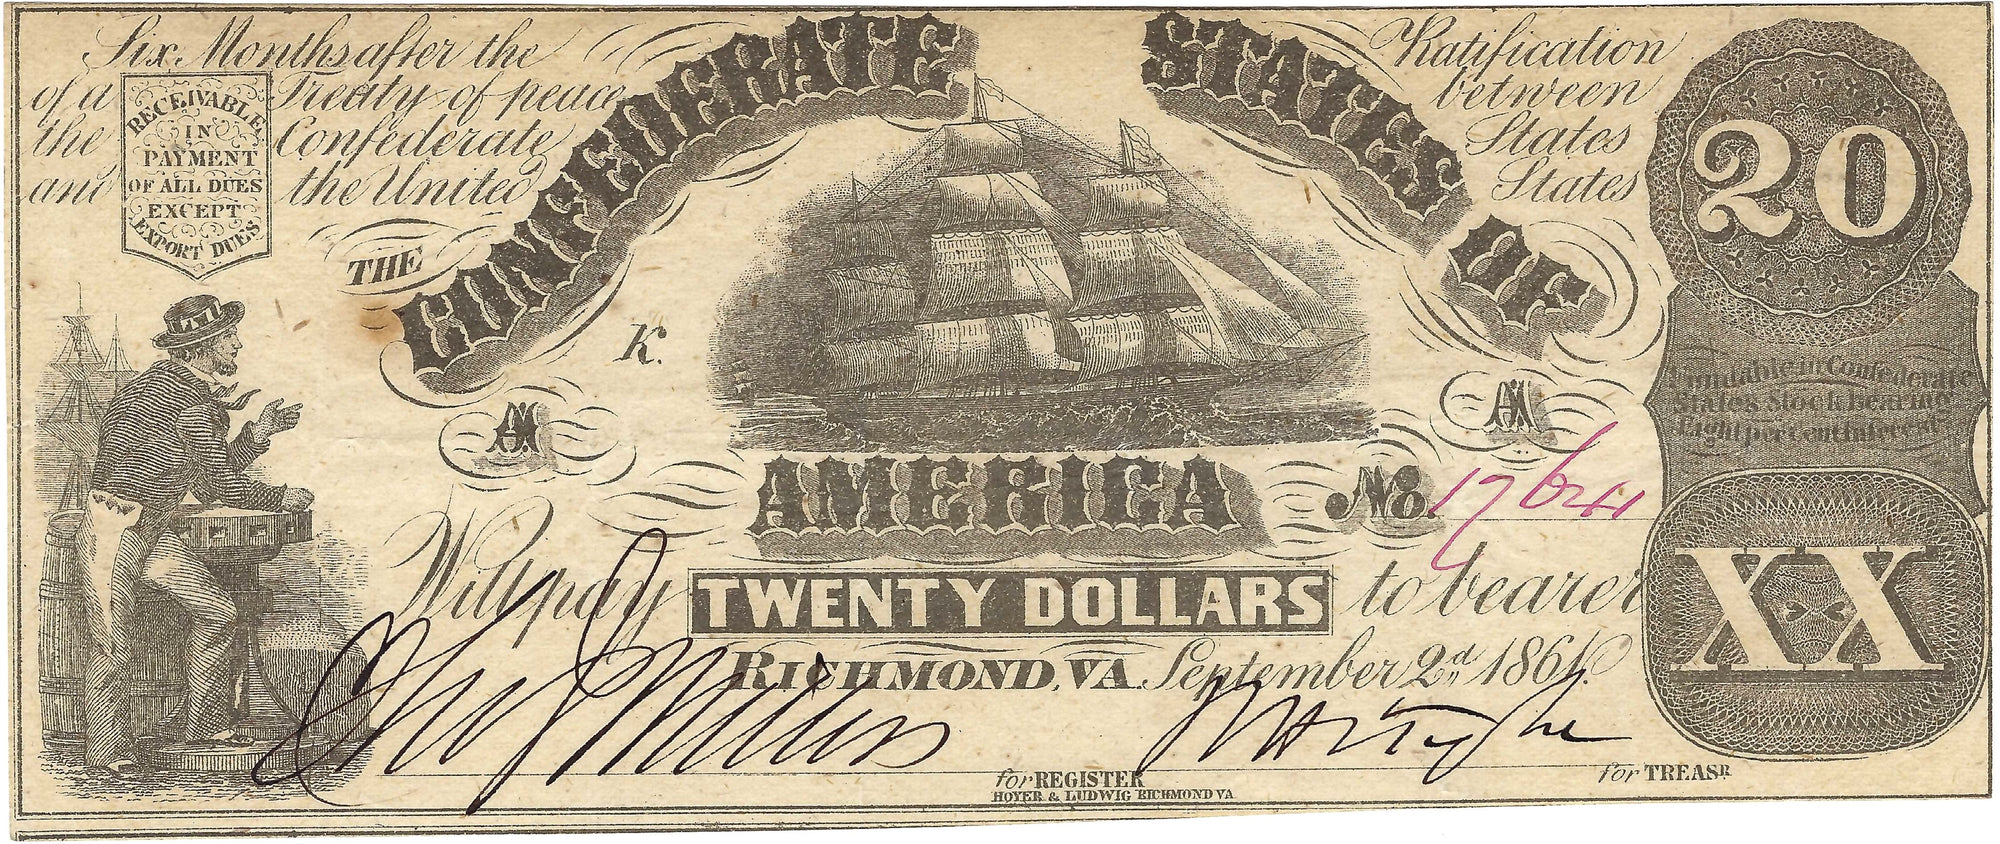 1864 $20 Confederate States of America, Richmond Virginia, Circulated Condition